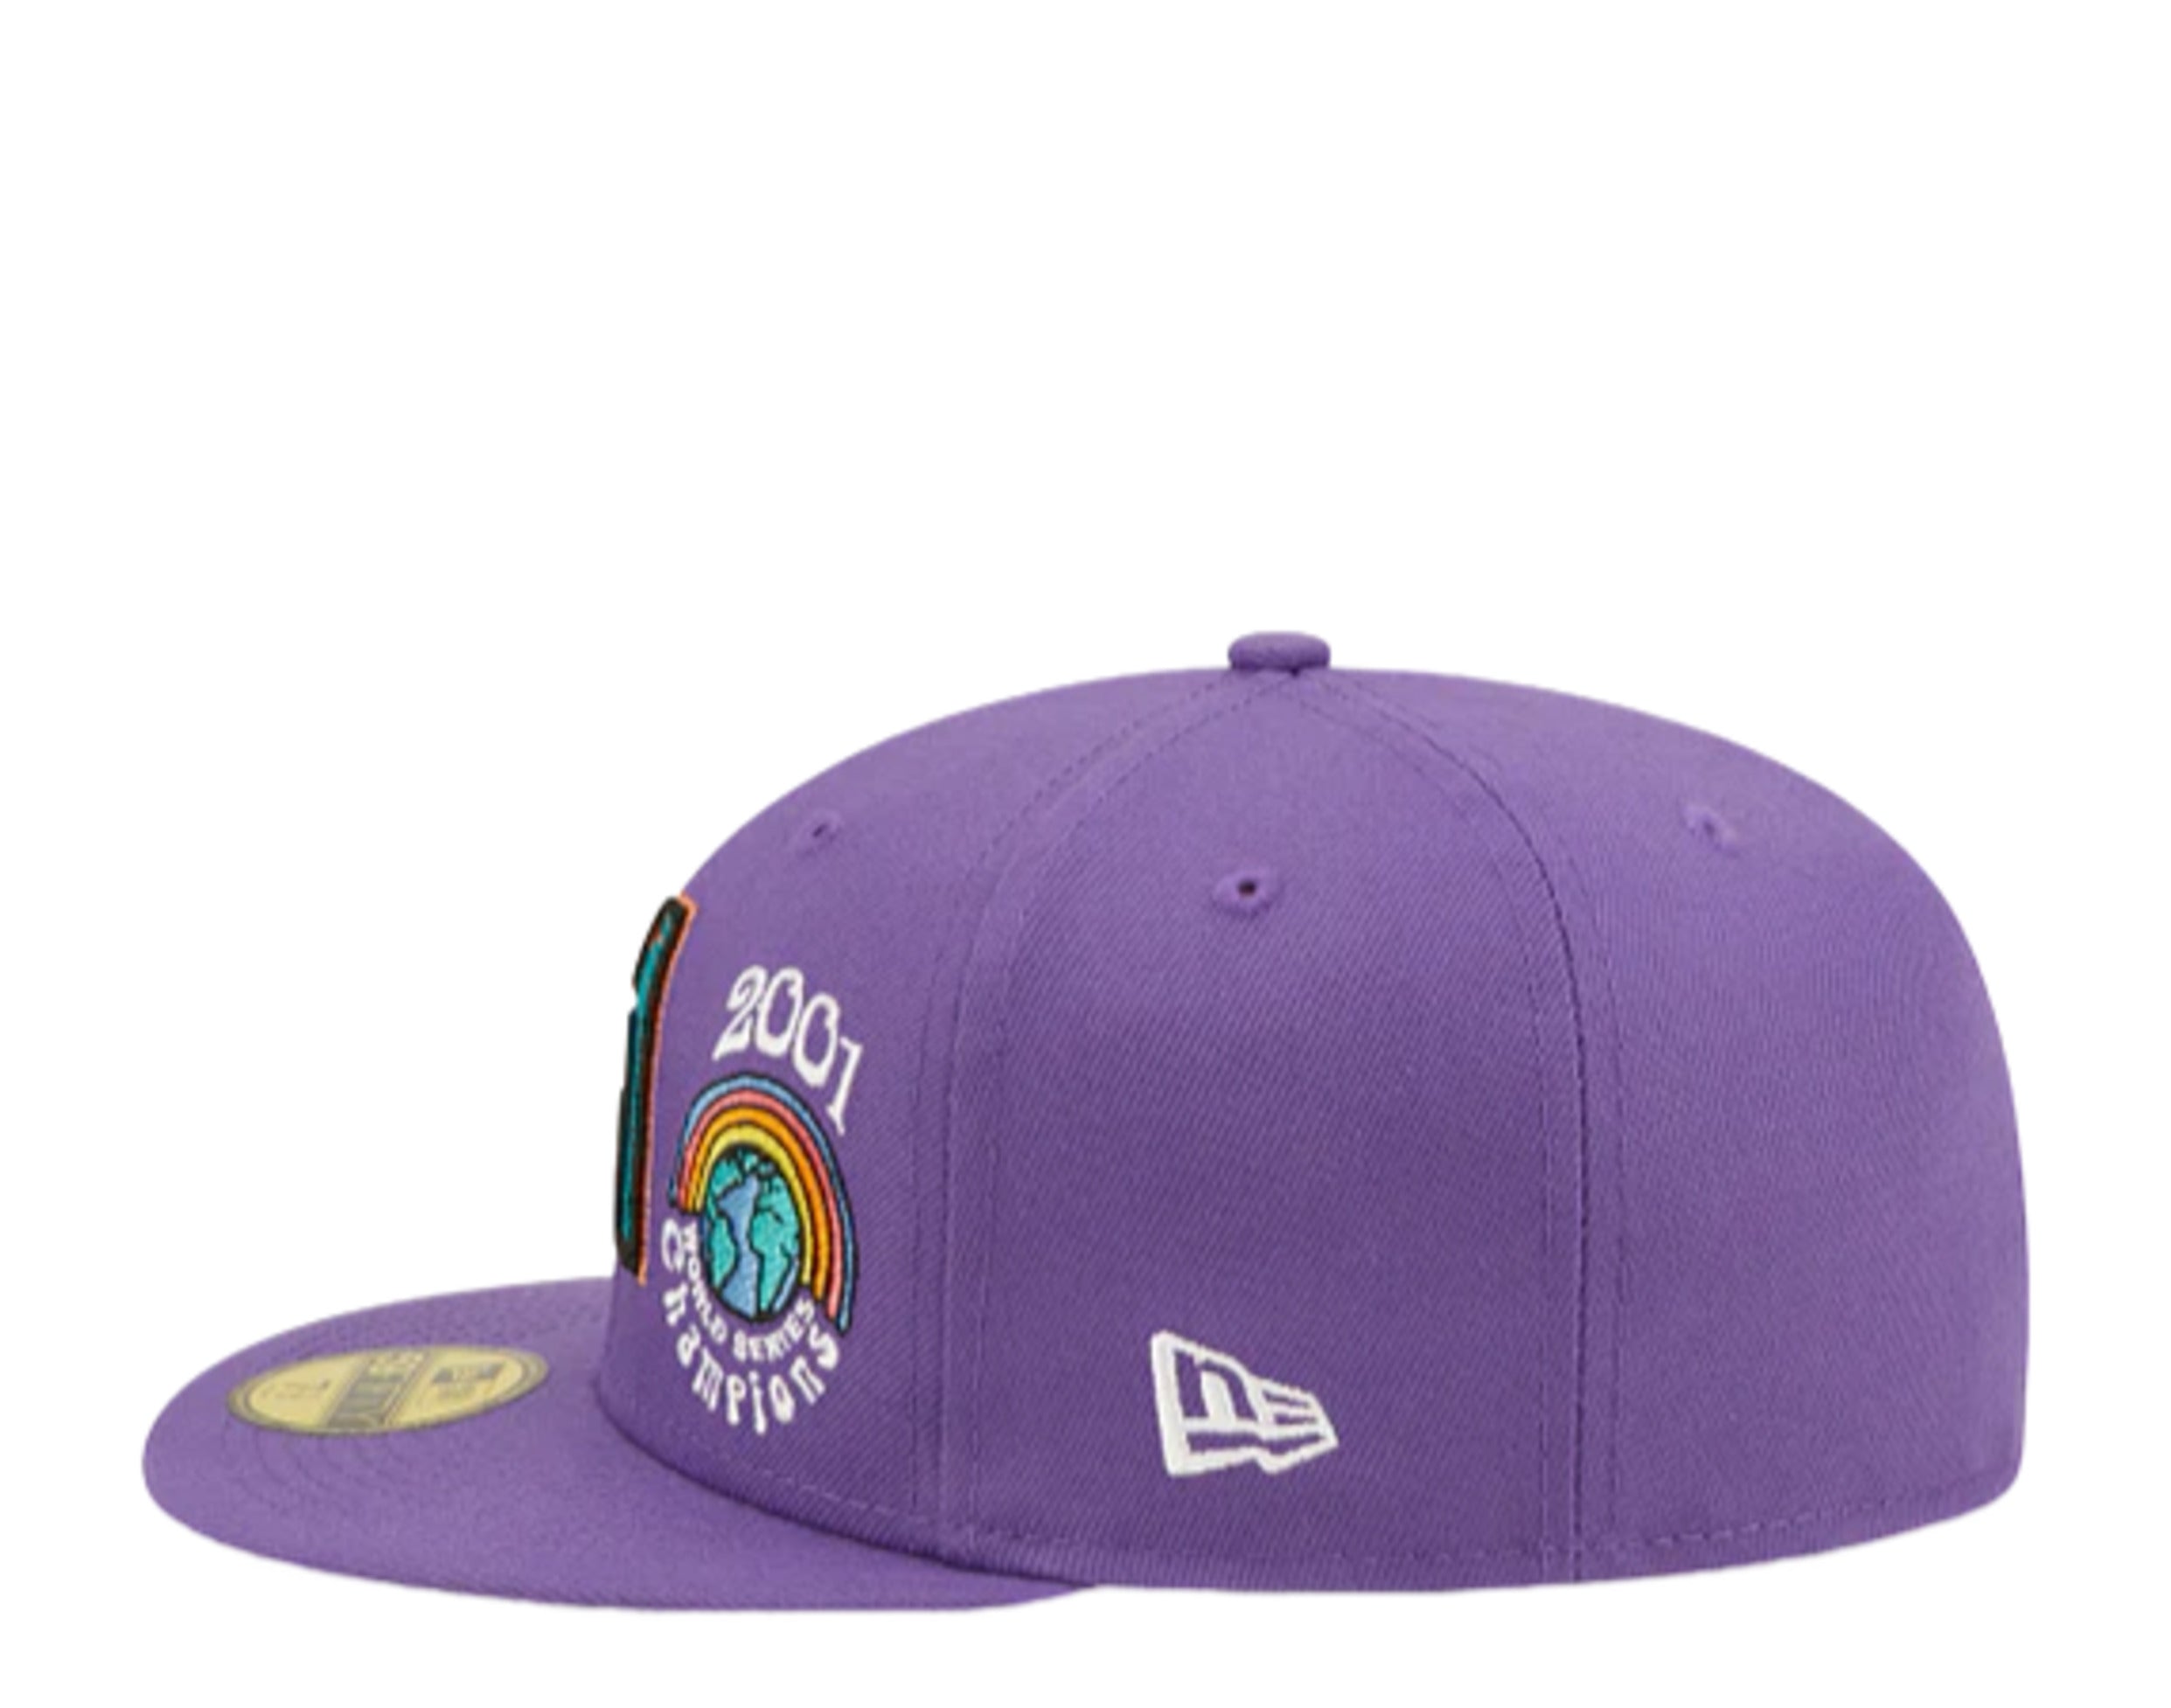 NBA NEW ERA 5950 59FIFTY Minnesota Timberwolves Hat Cap Size 7 1/4